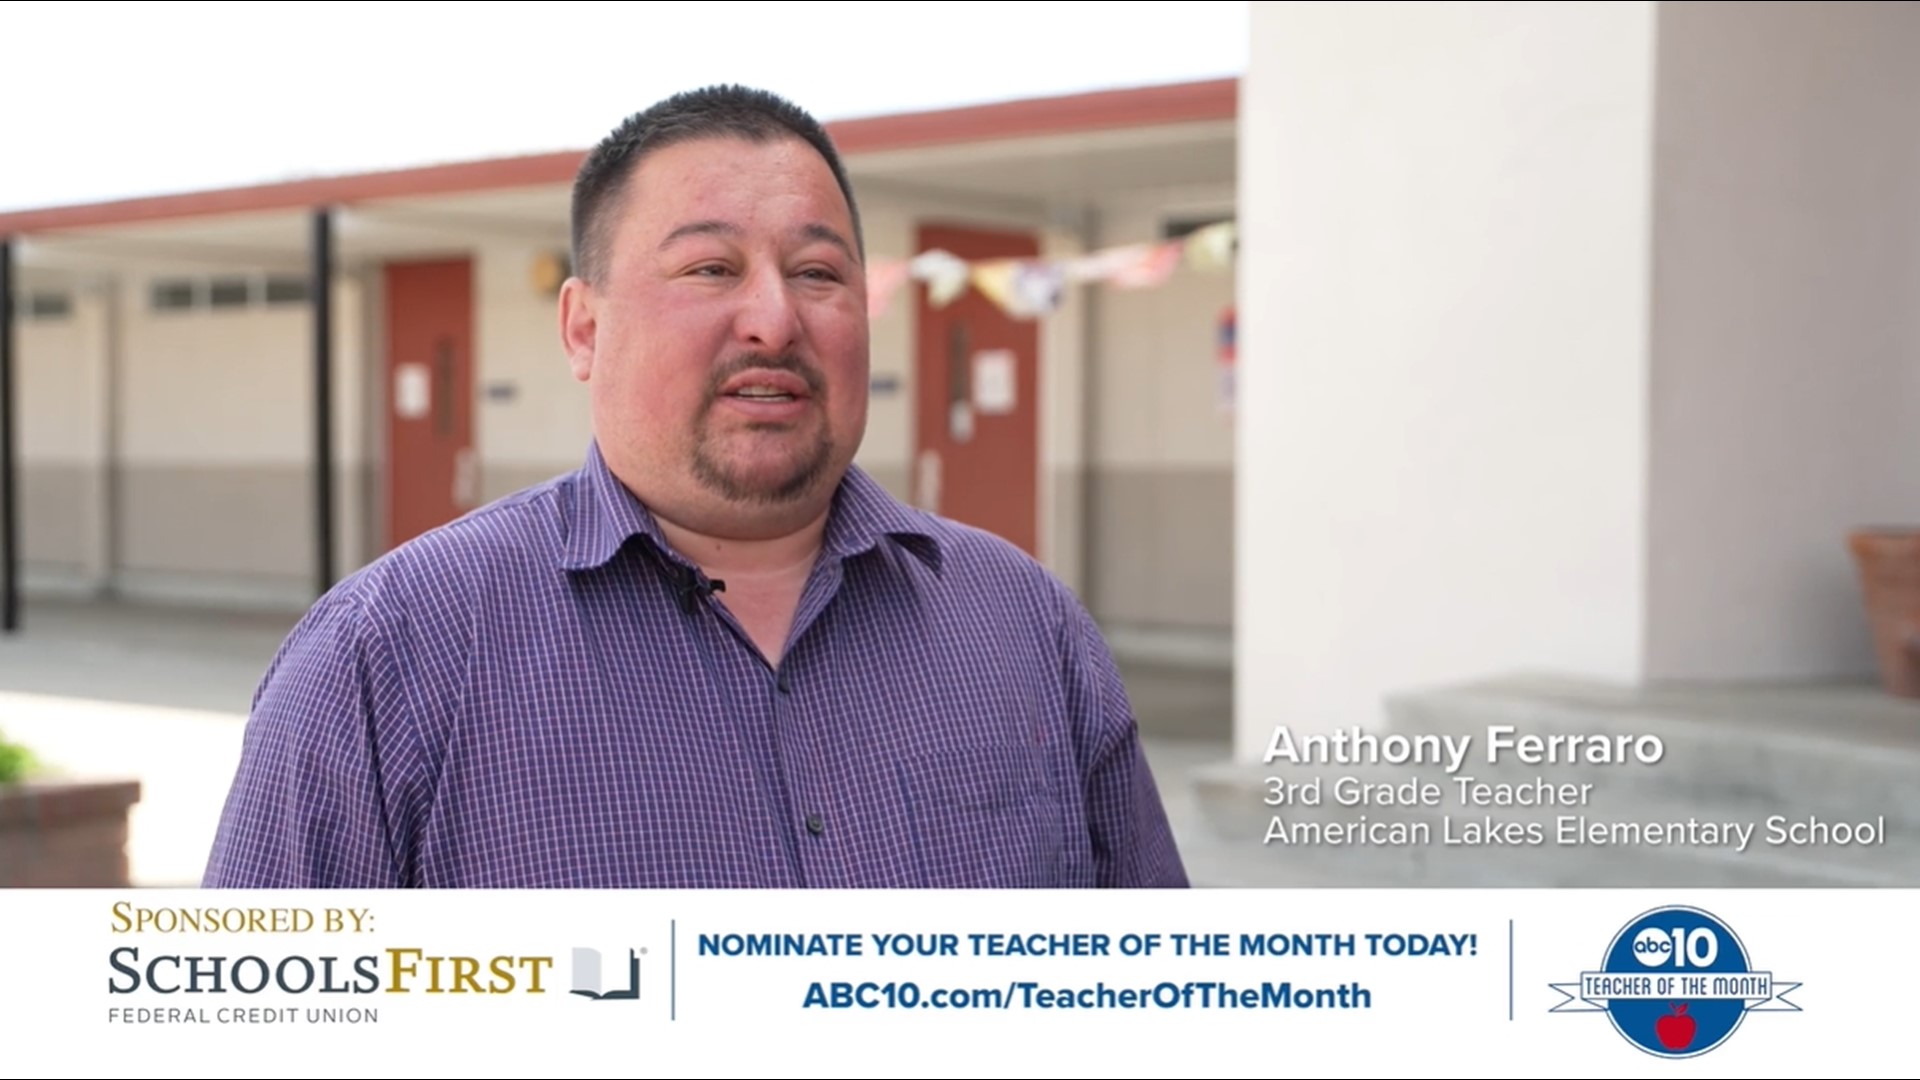 Mr. Ferraro is a 3rd grade teacher at American Lakes School in Sacramento.